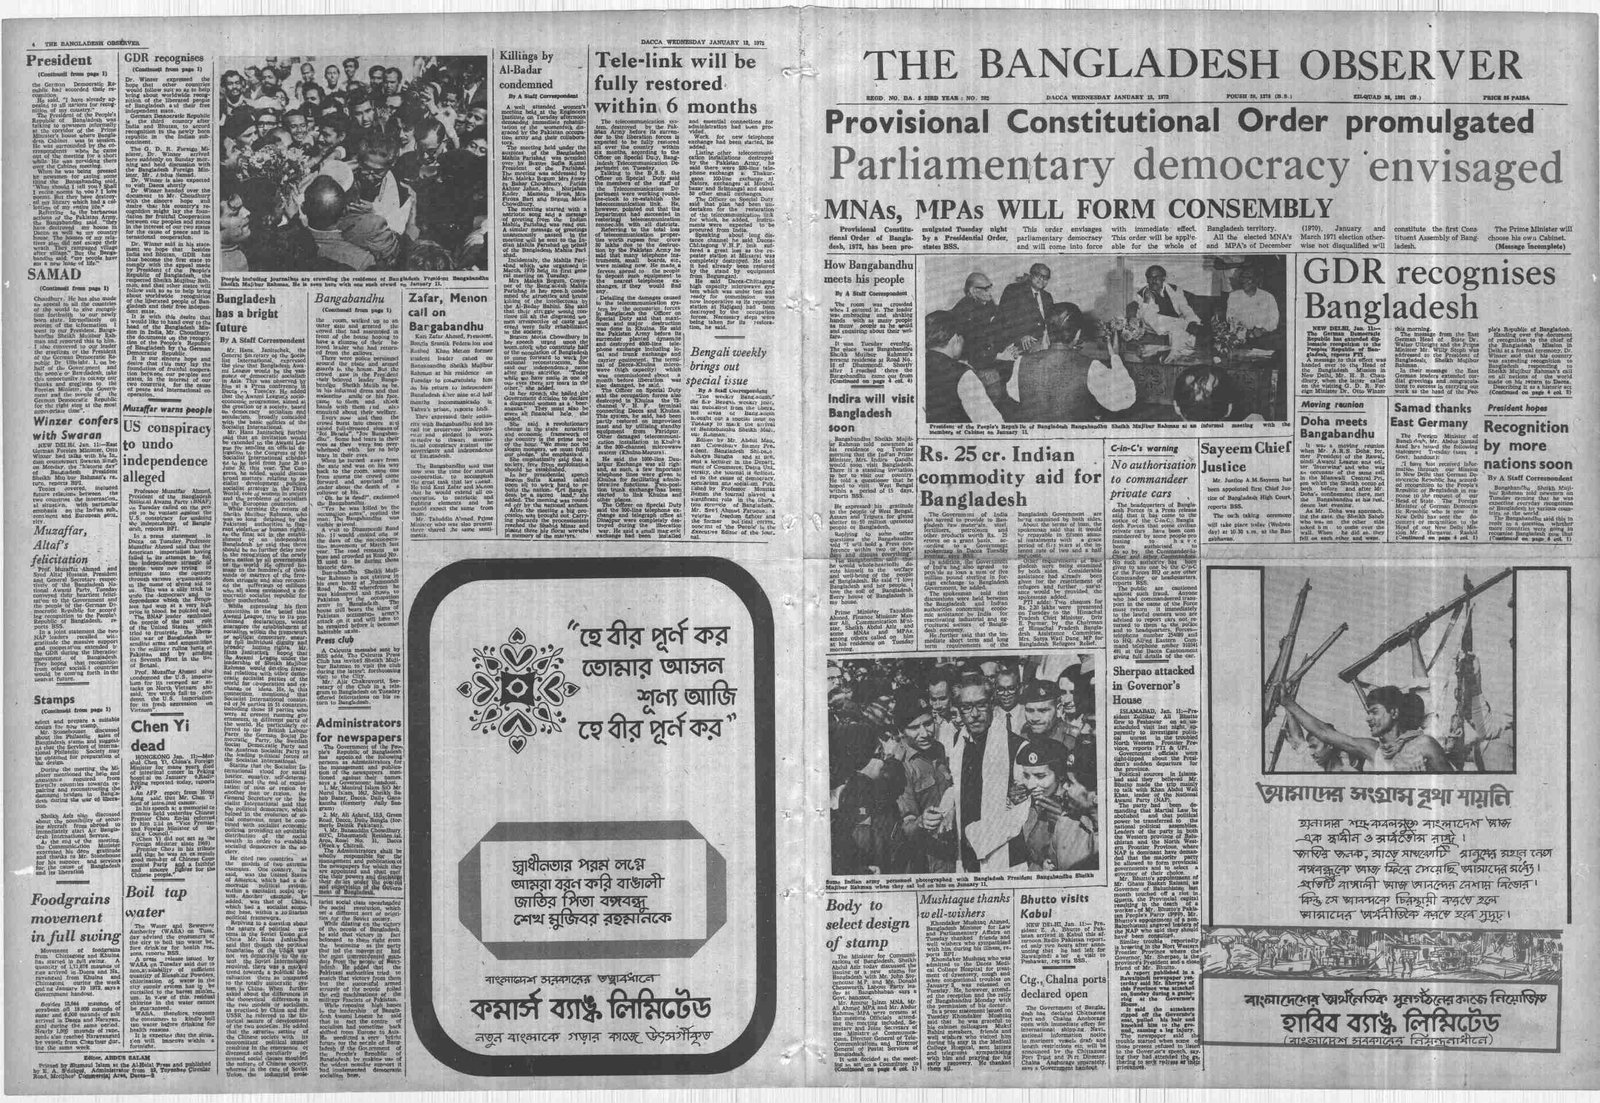 12JAN1972-Bangladesh Observer-Regular-Page 1 and 4